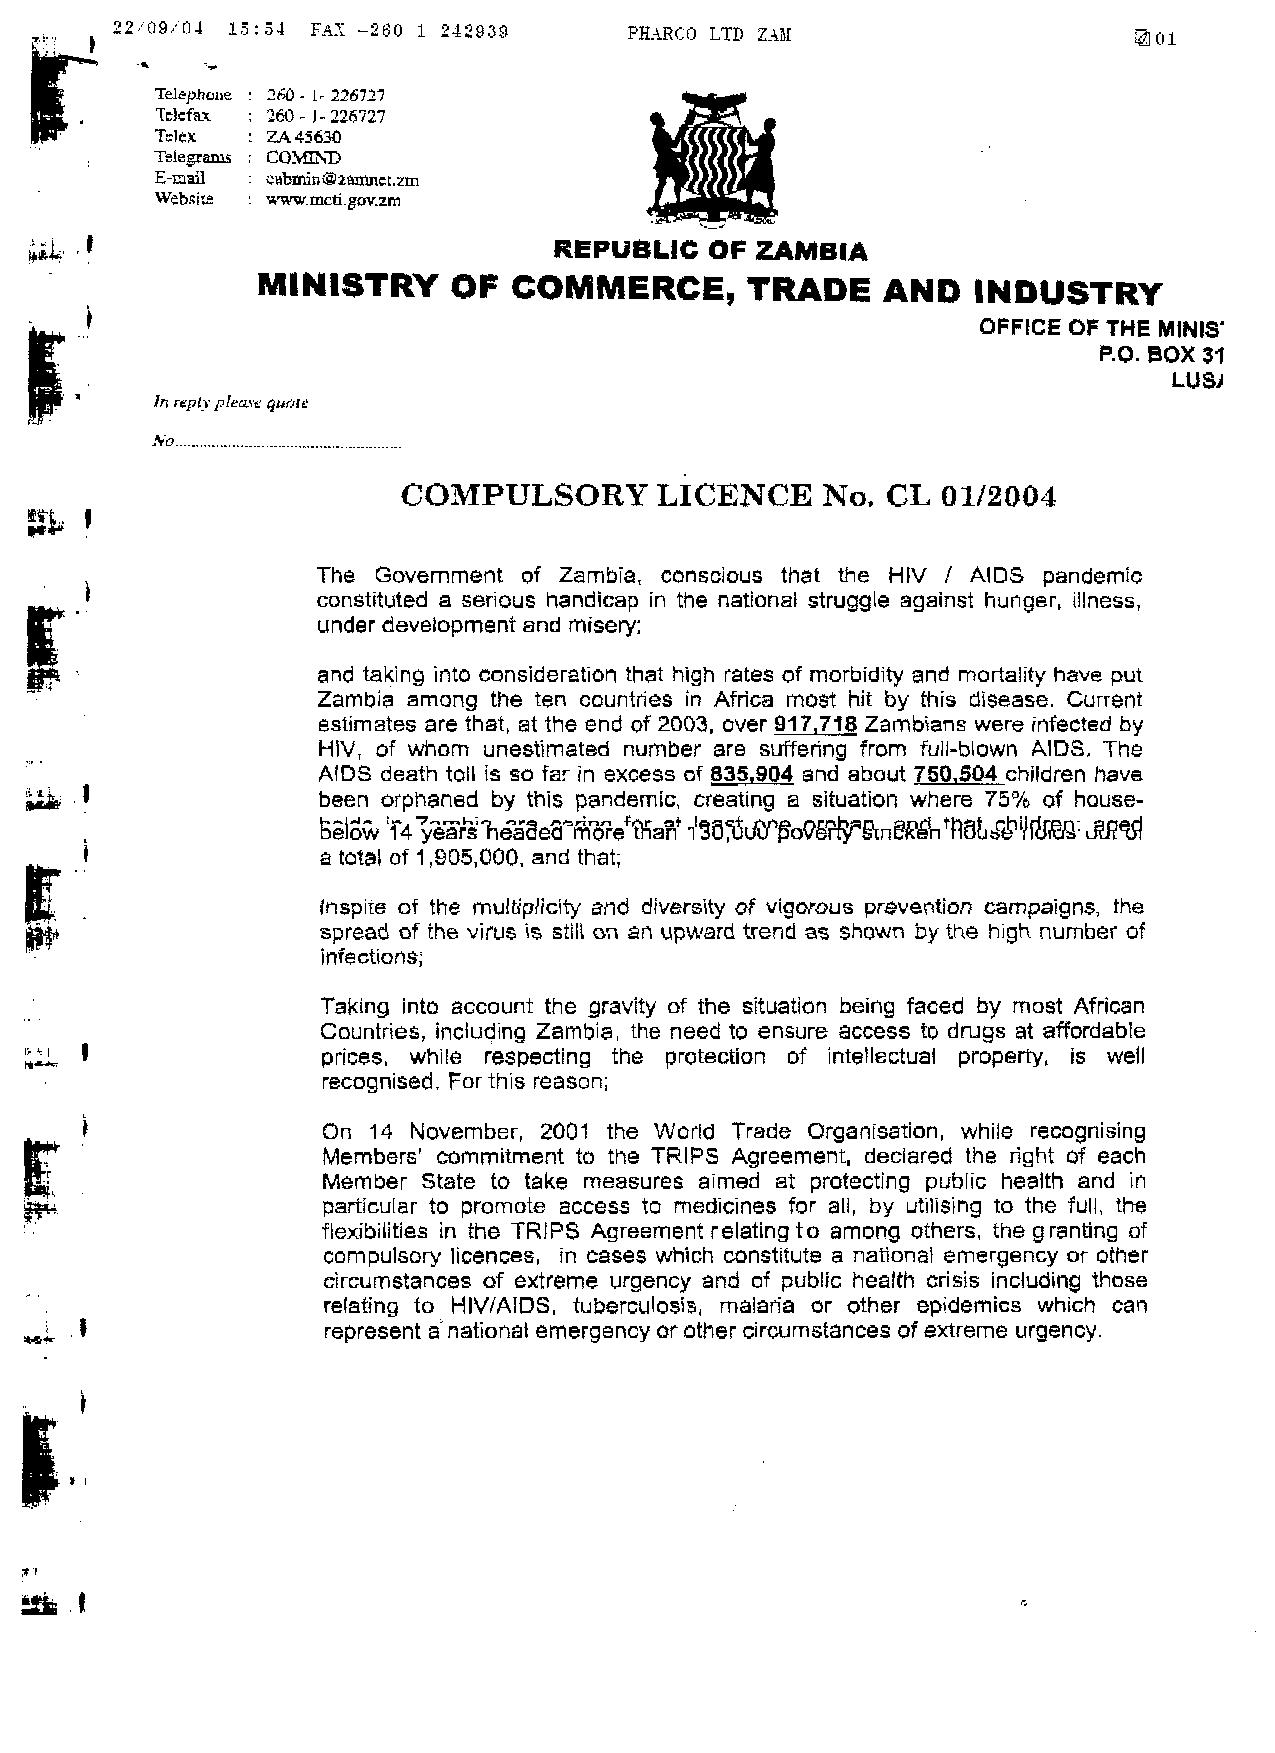 Zambia Compulsory License